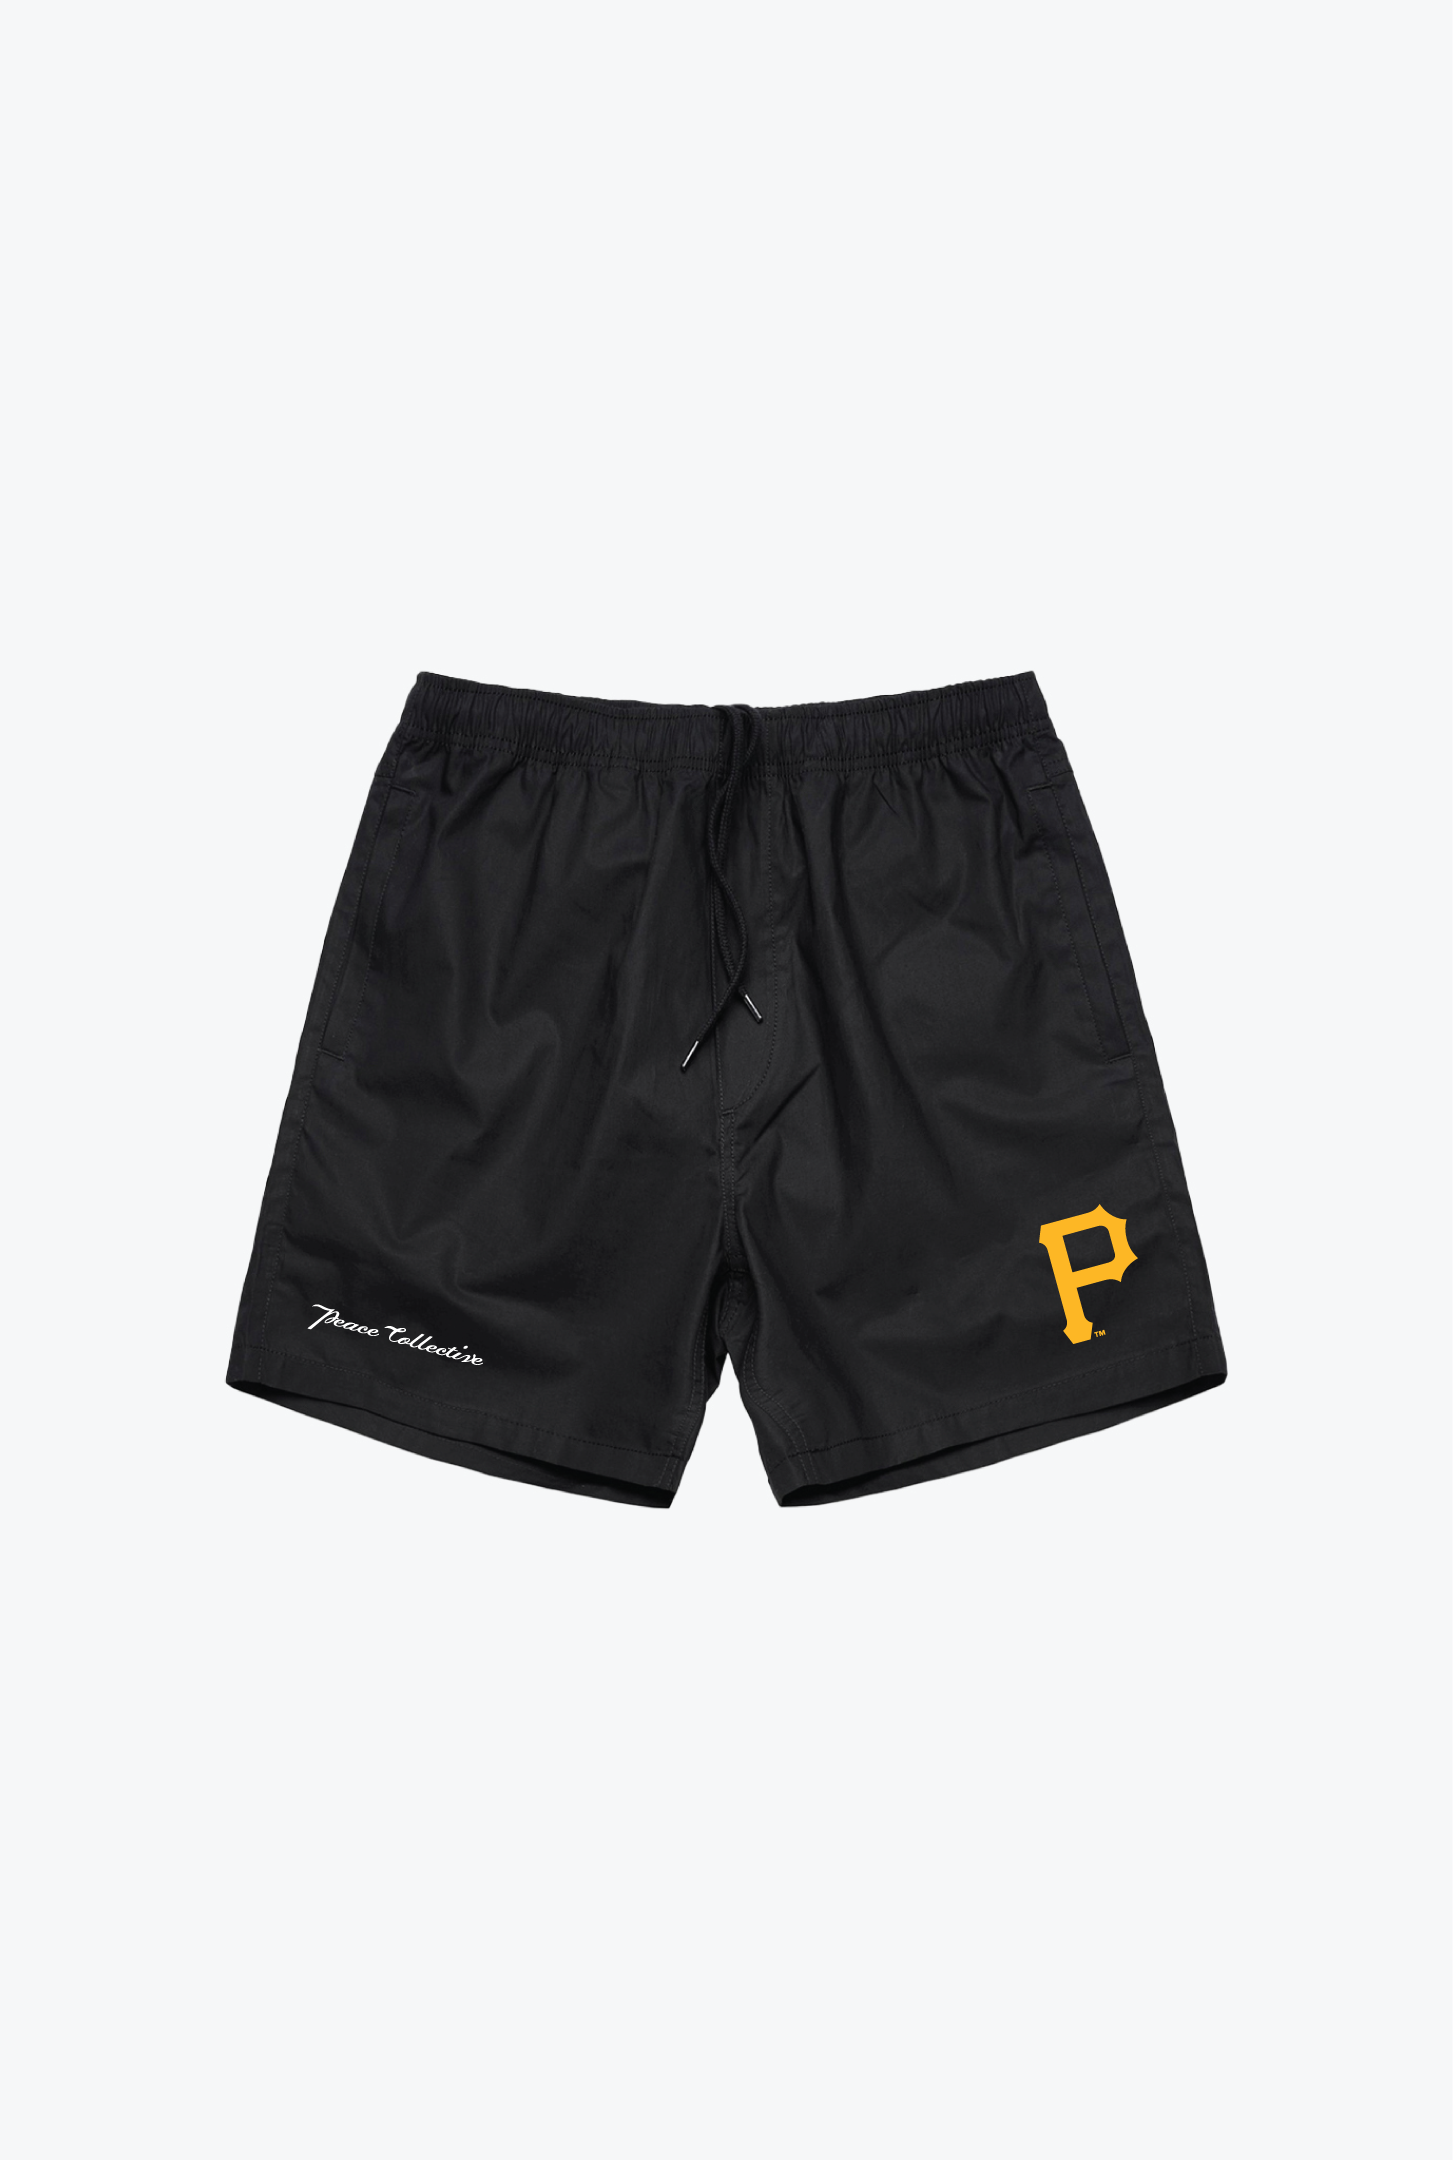 Pittsburgh Pirates Board Shorts - Black